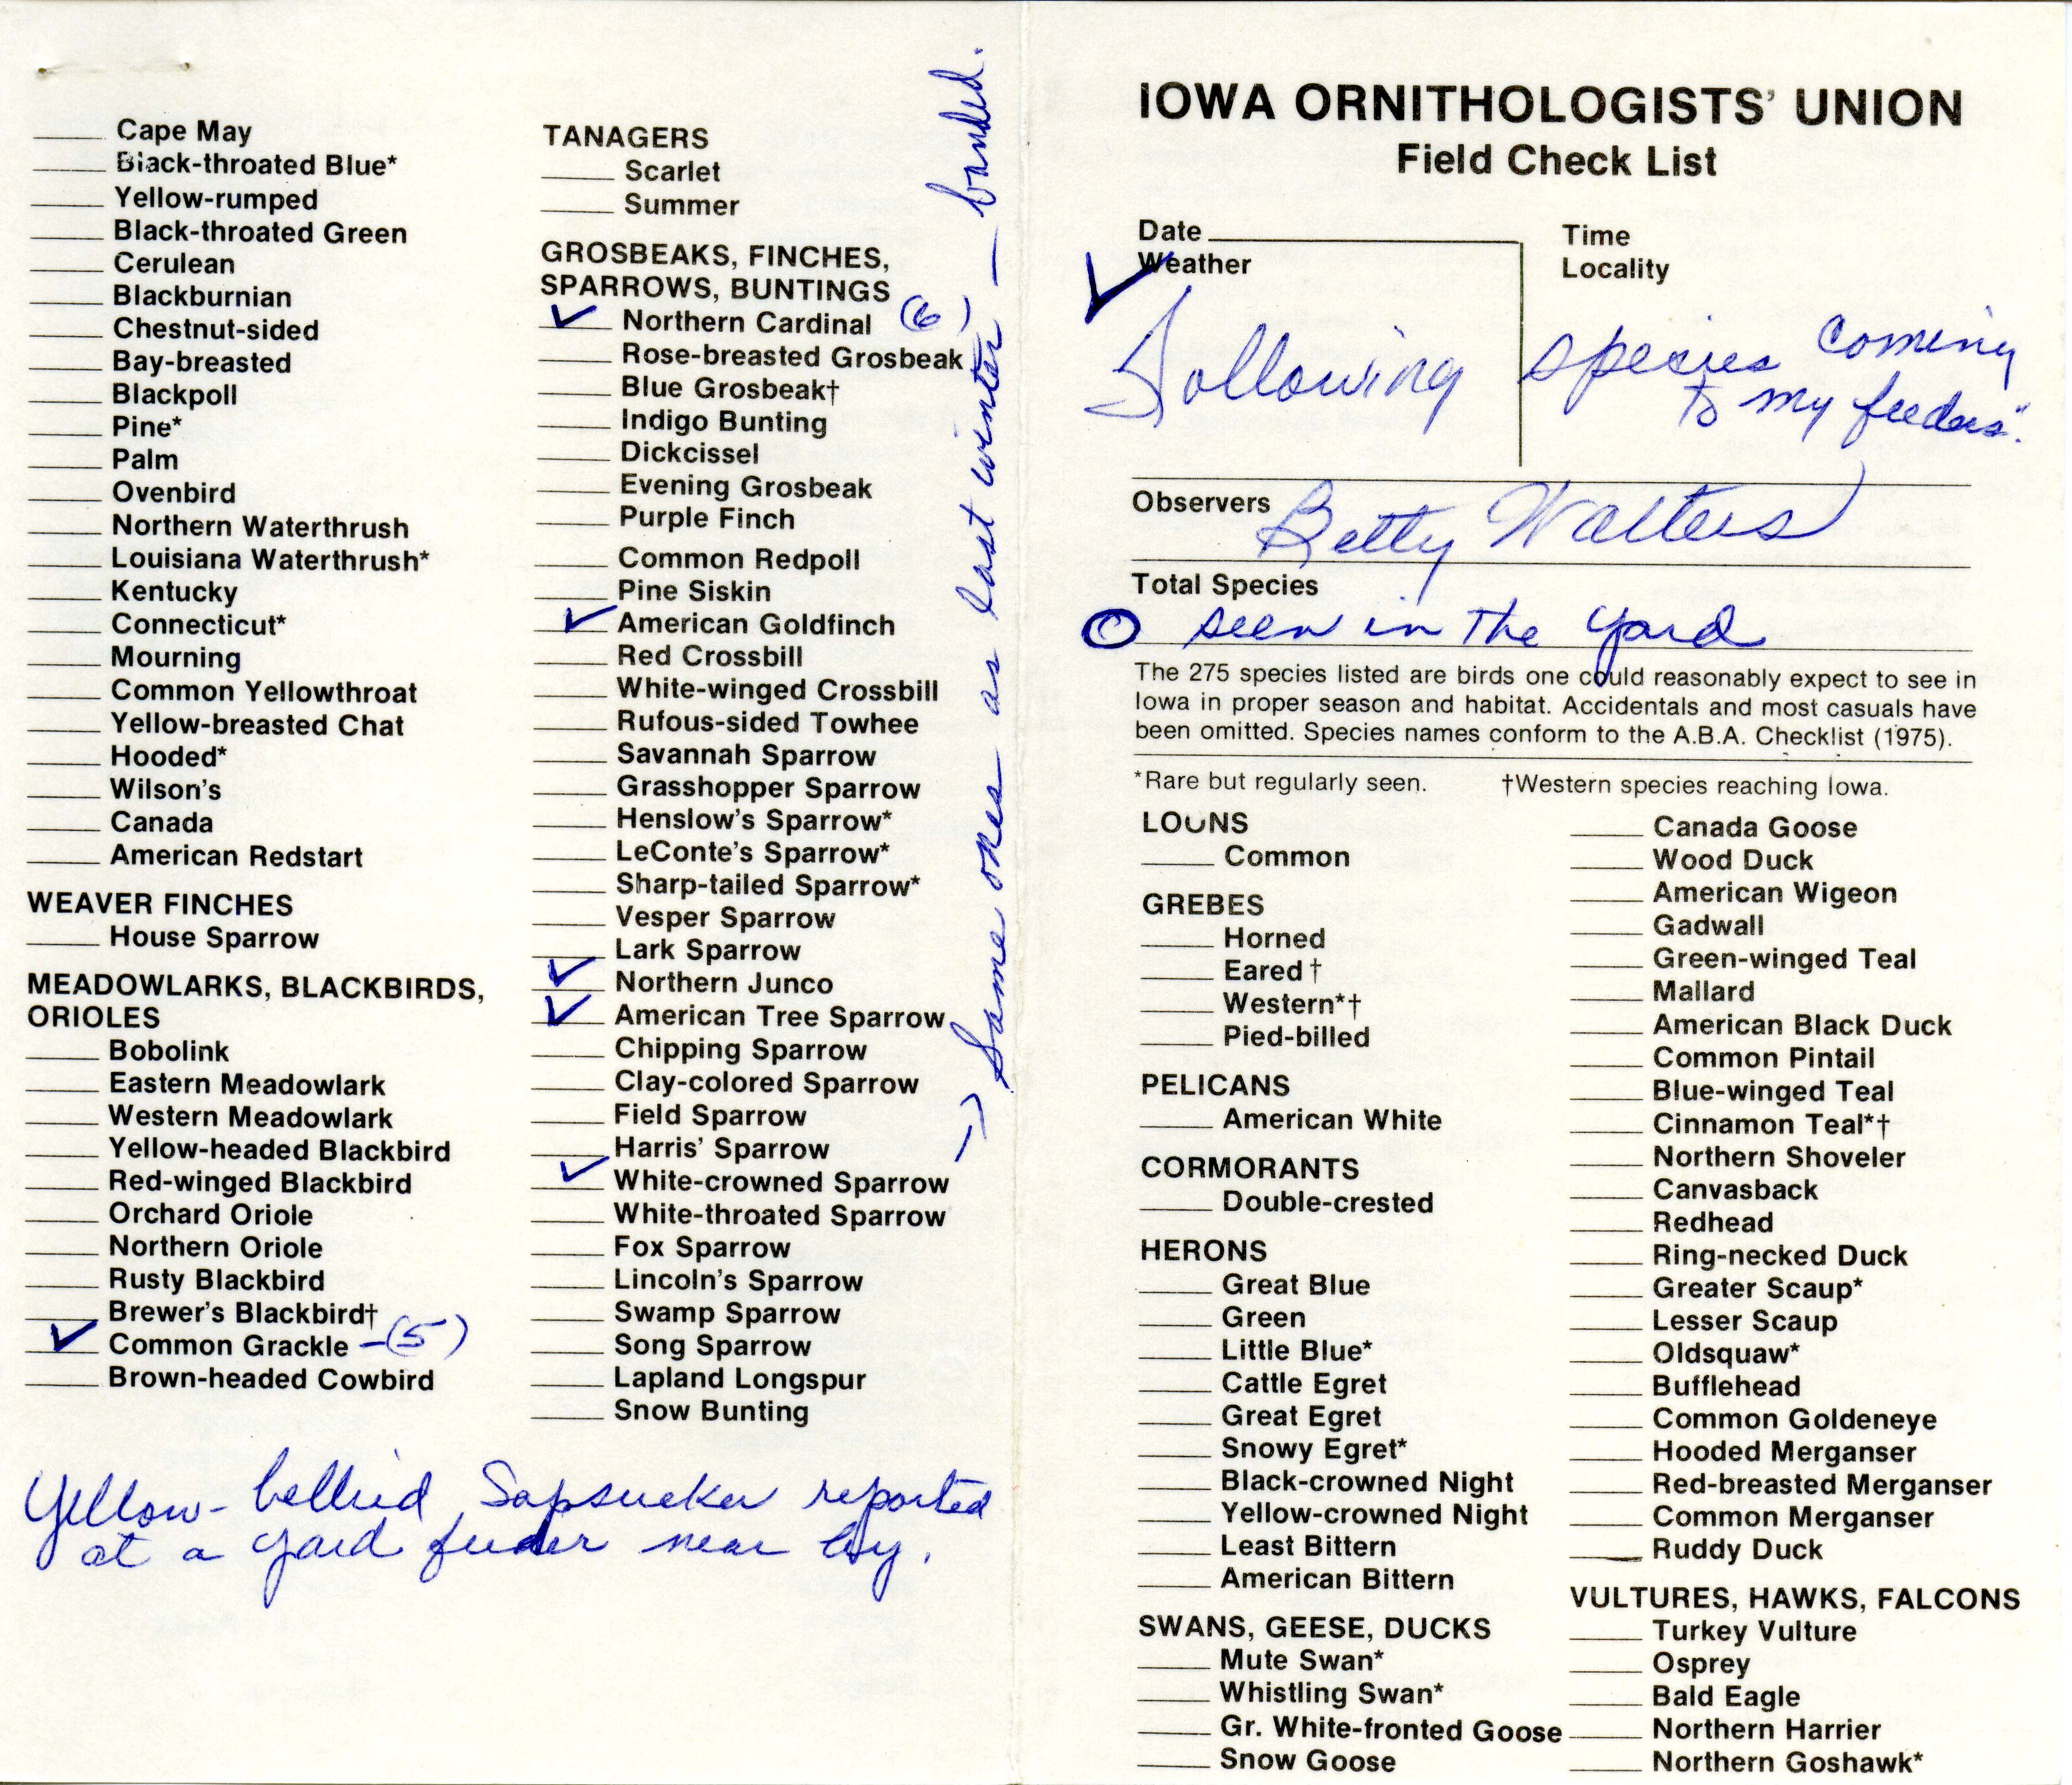 Iowa Ornithologists' Union field check list, winter 1979-1980